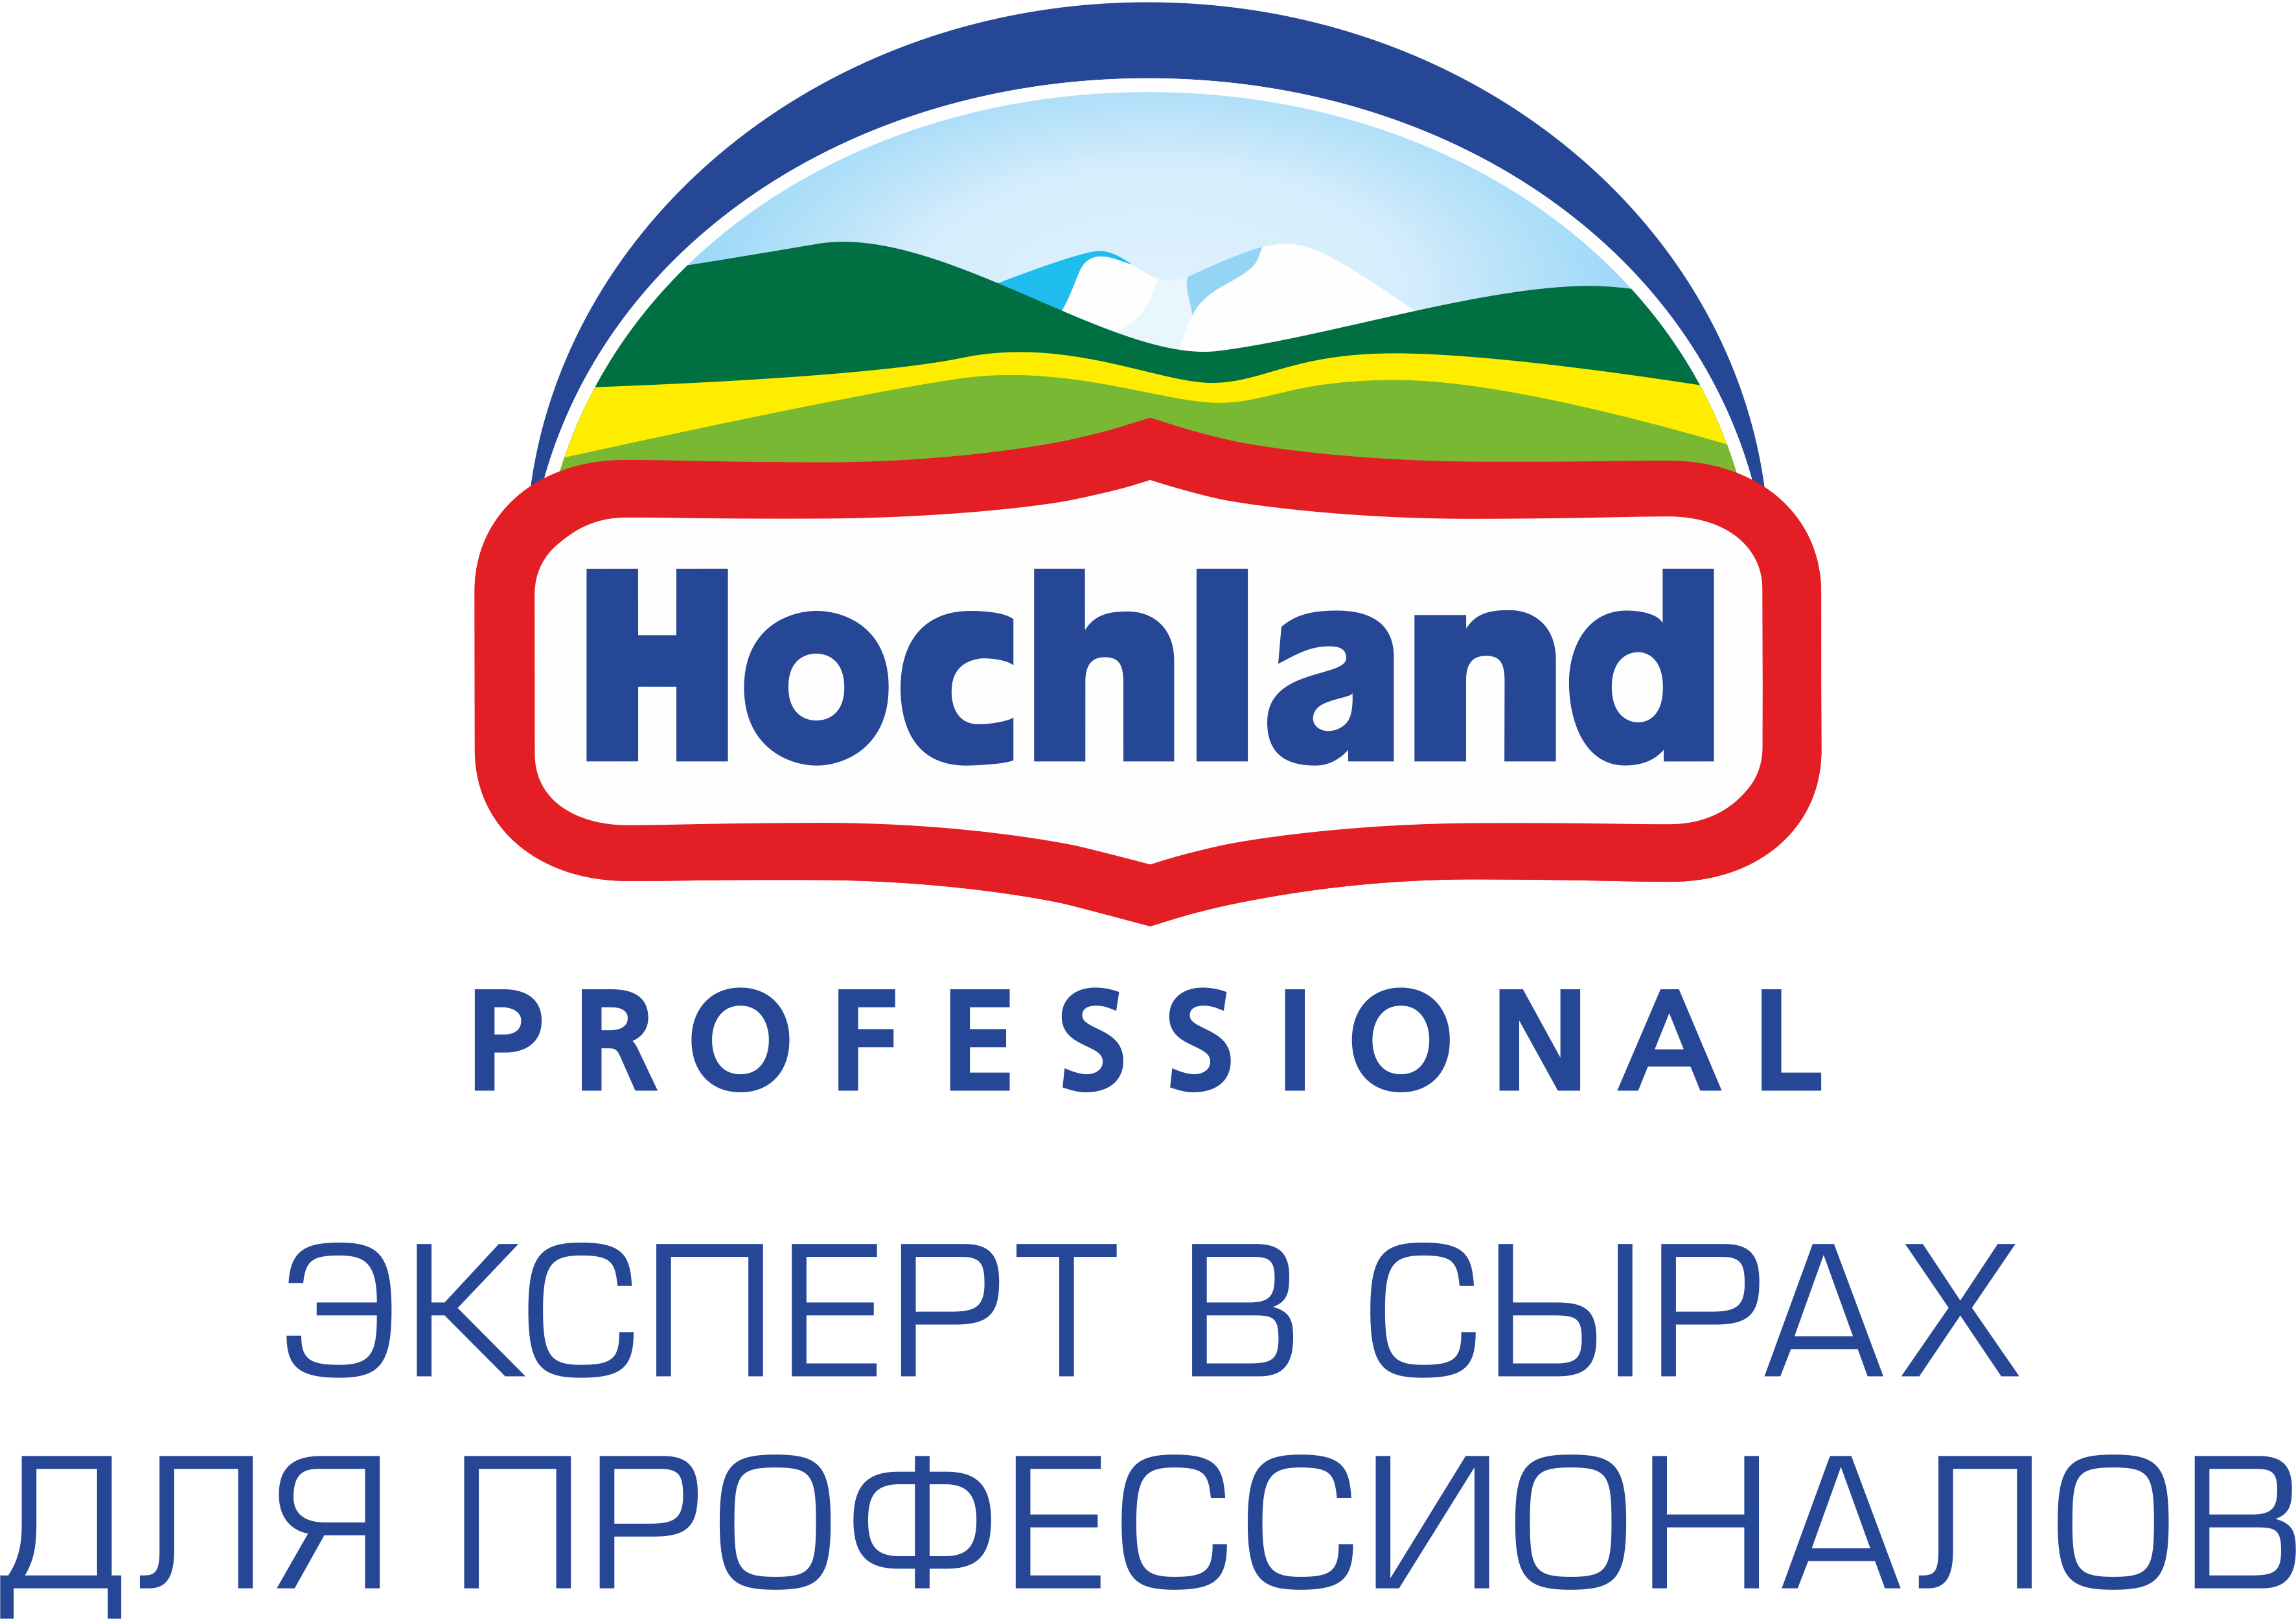 HOCHLAND PROFESSIONAL